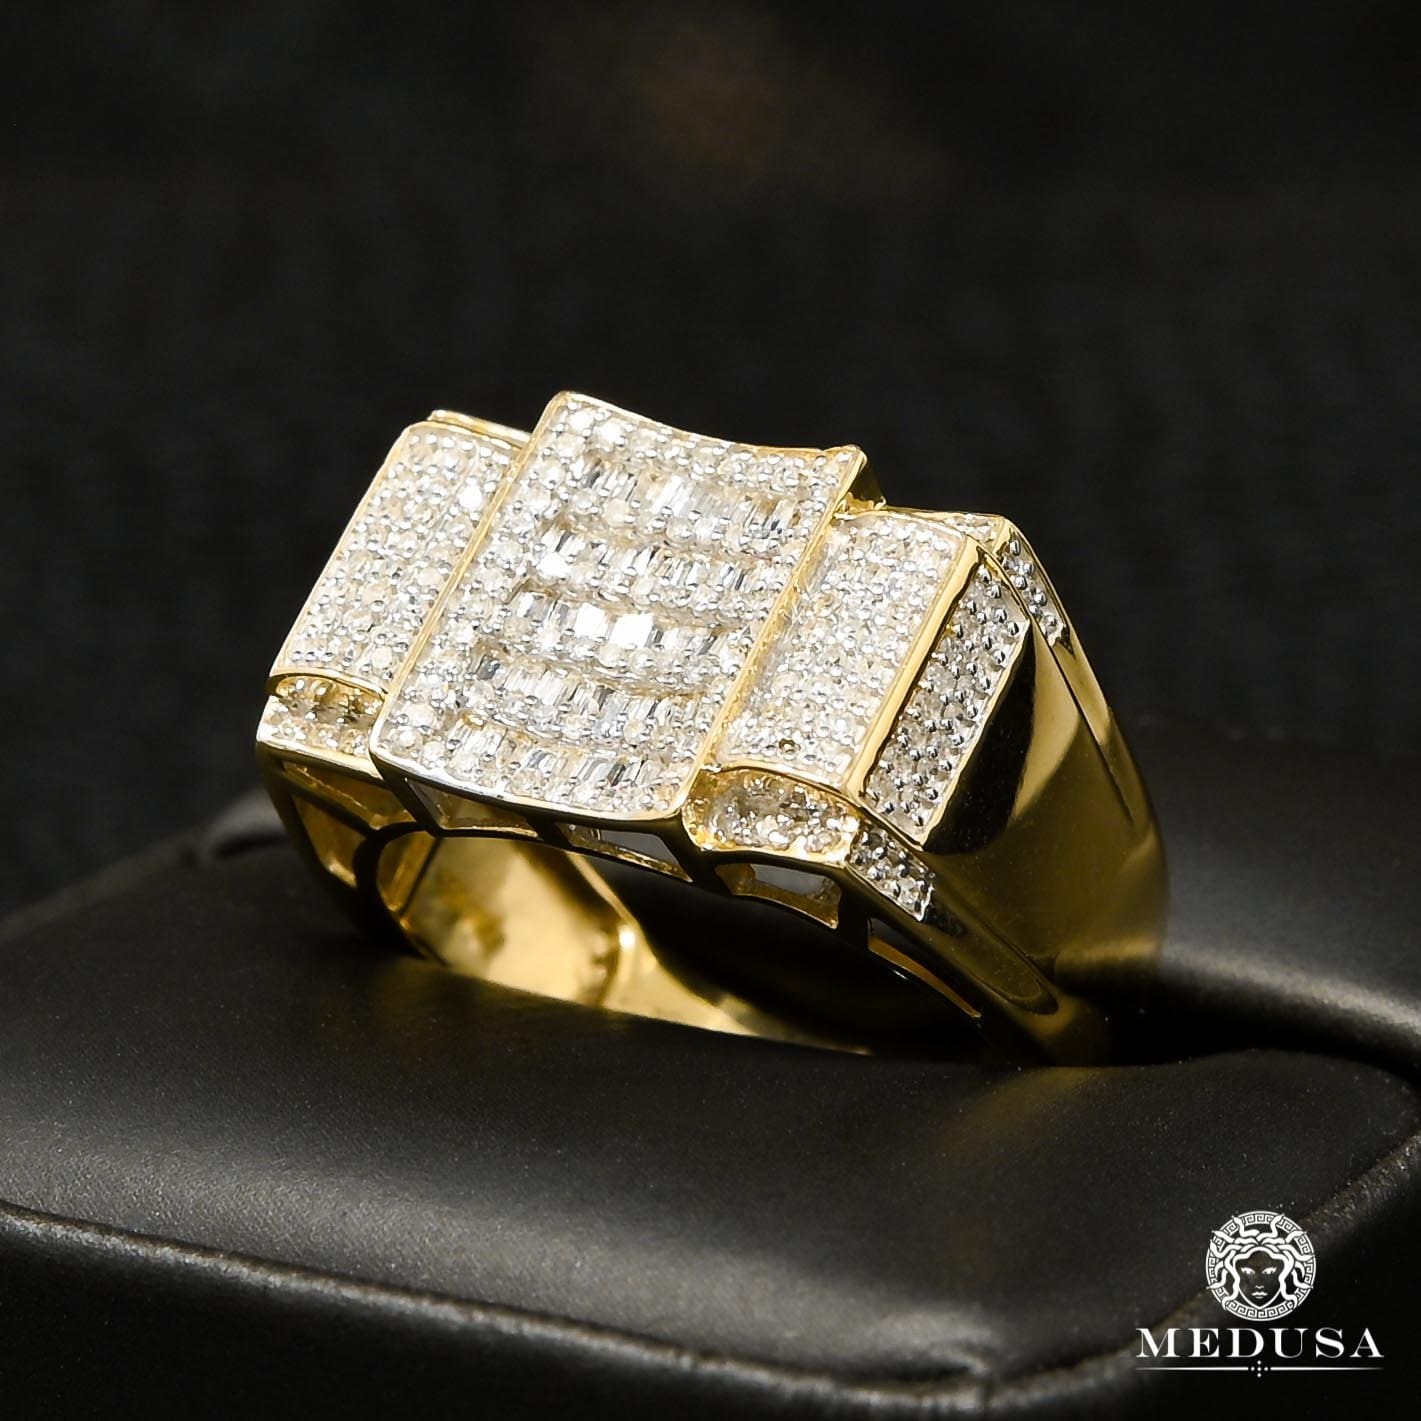 10K Gold Diamond Ring | Square D19 Men's Ring - 1.00CT Diamond / Yellow Gold